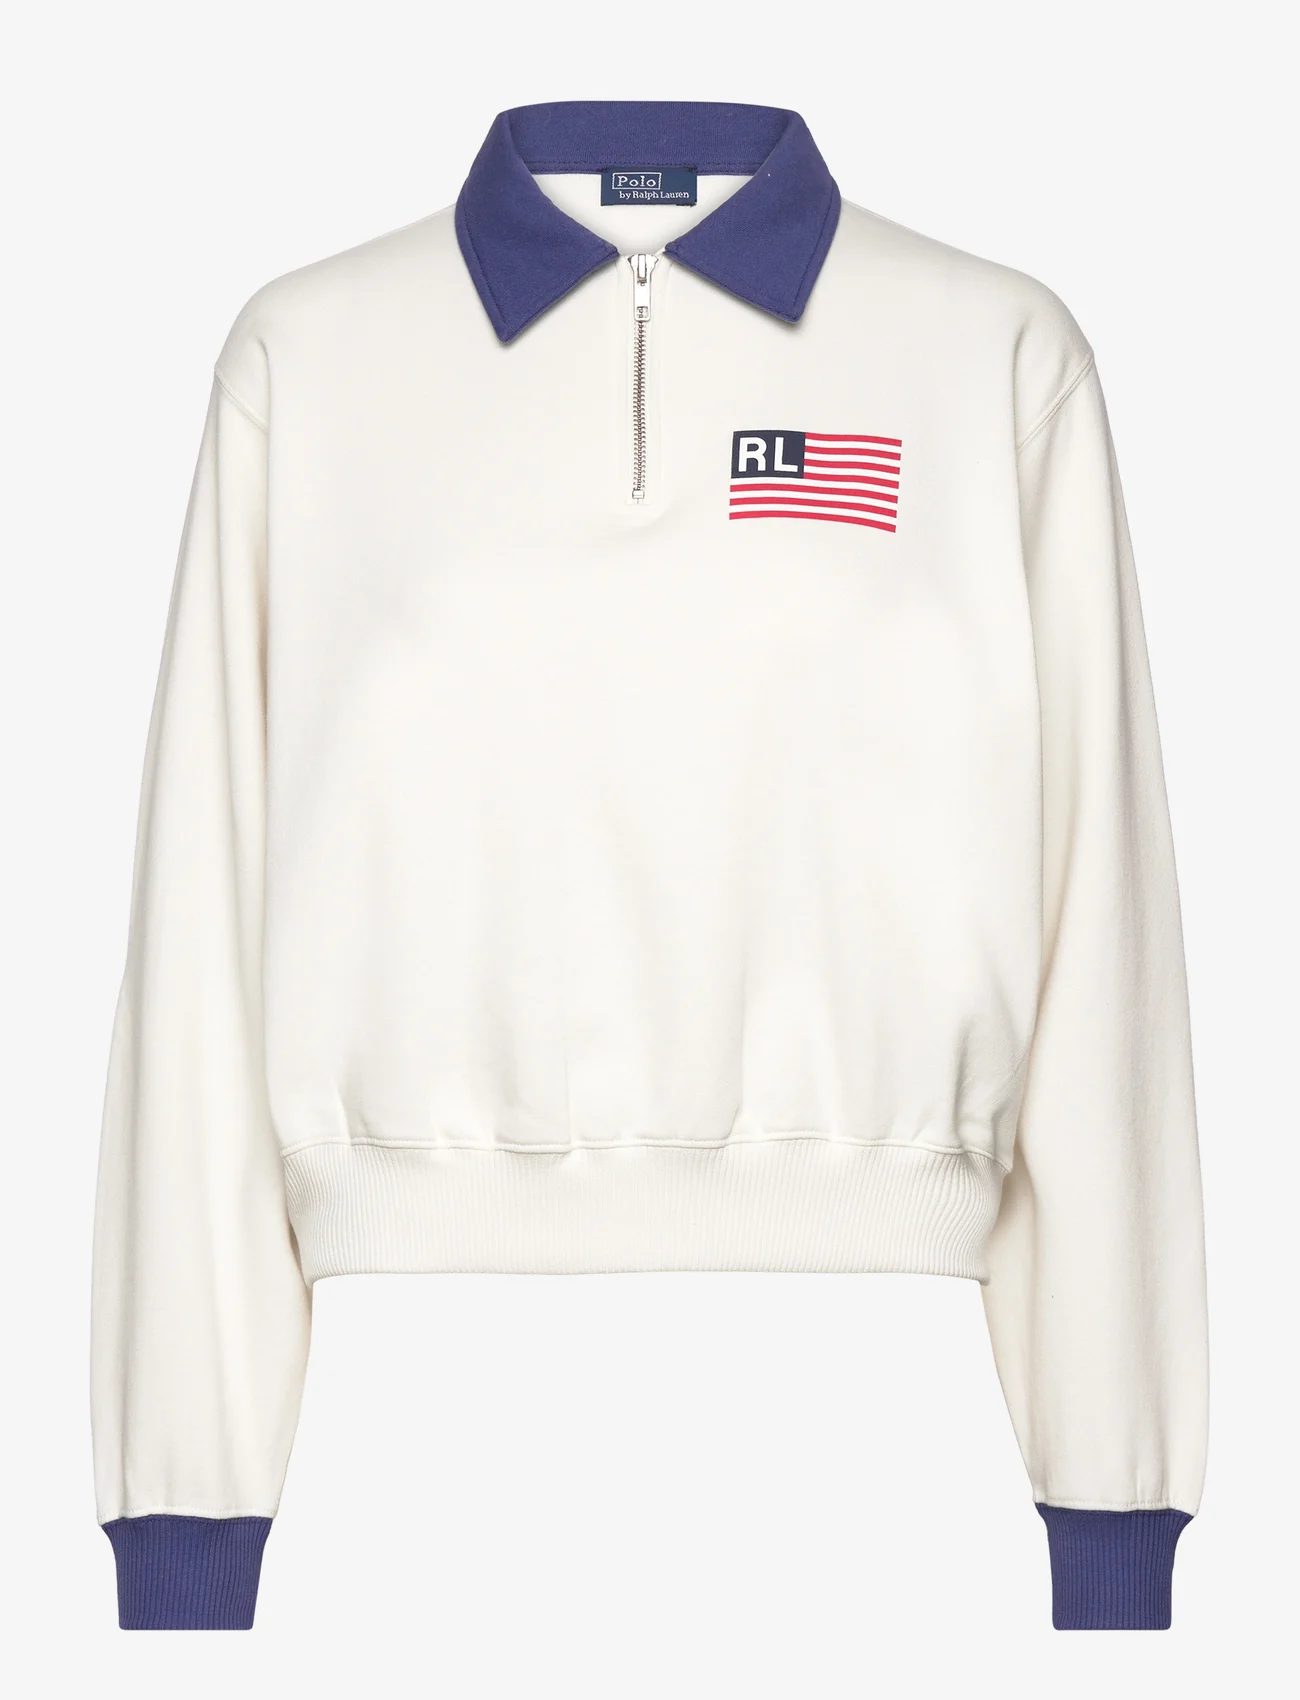 Polo Ralph Lauren - Logo Flag Fleece Half-Zip Pullover - sweatshirts - deckwash white - 0